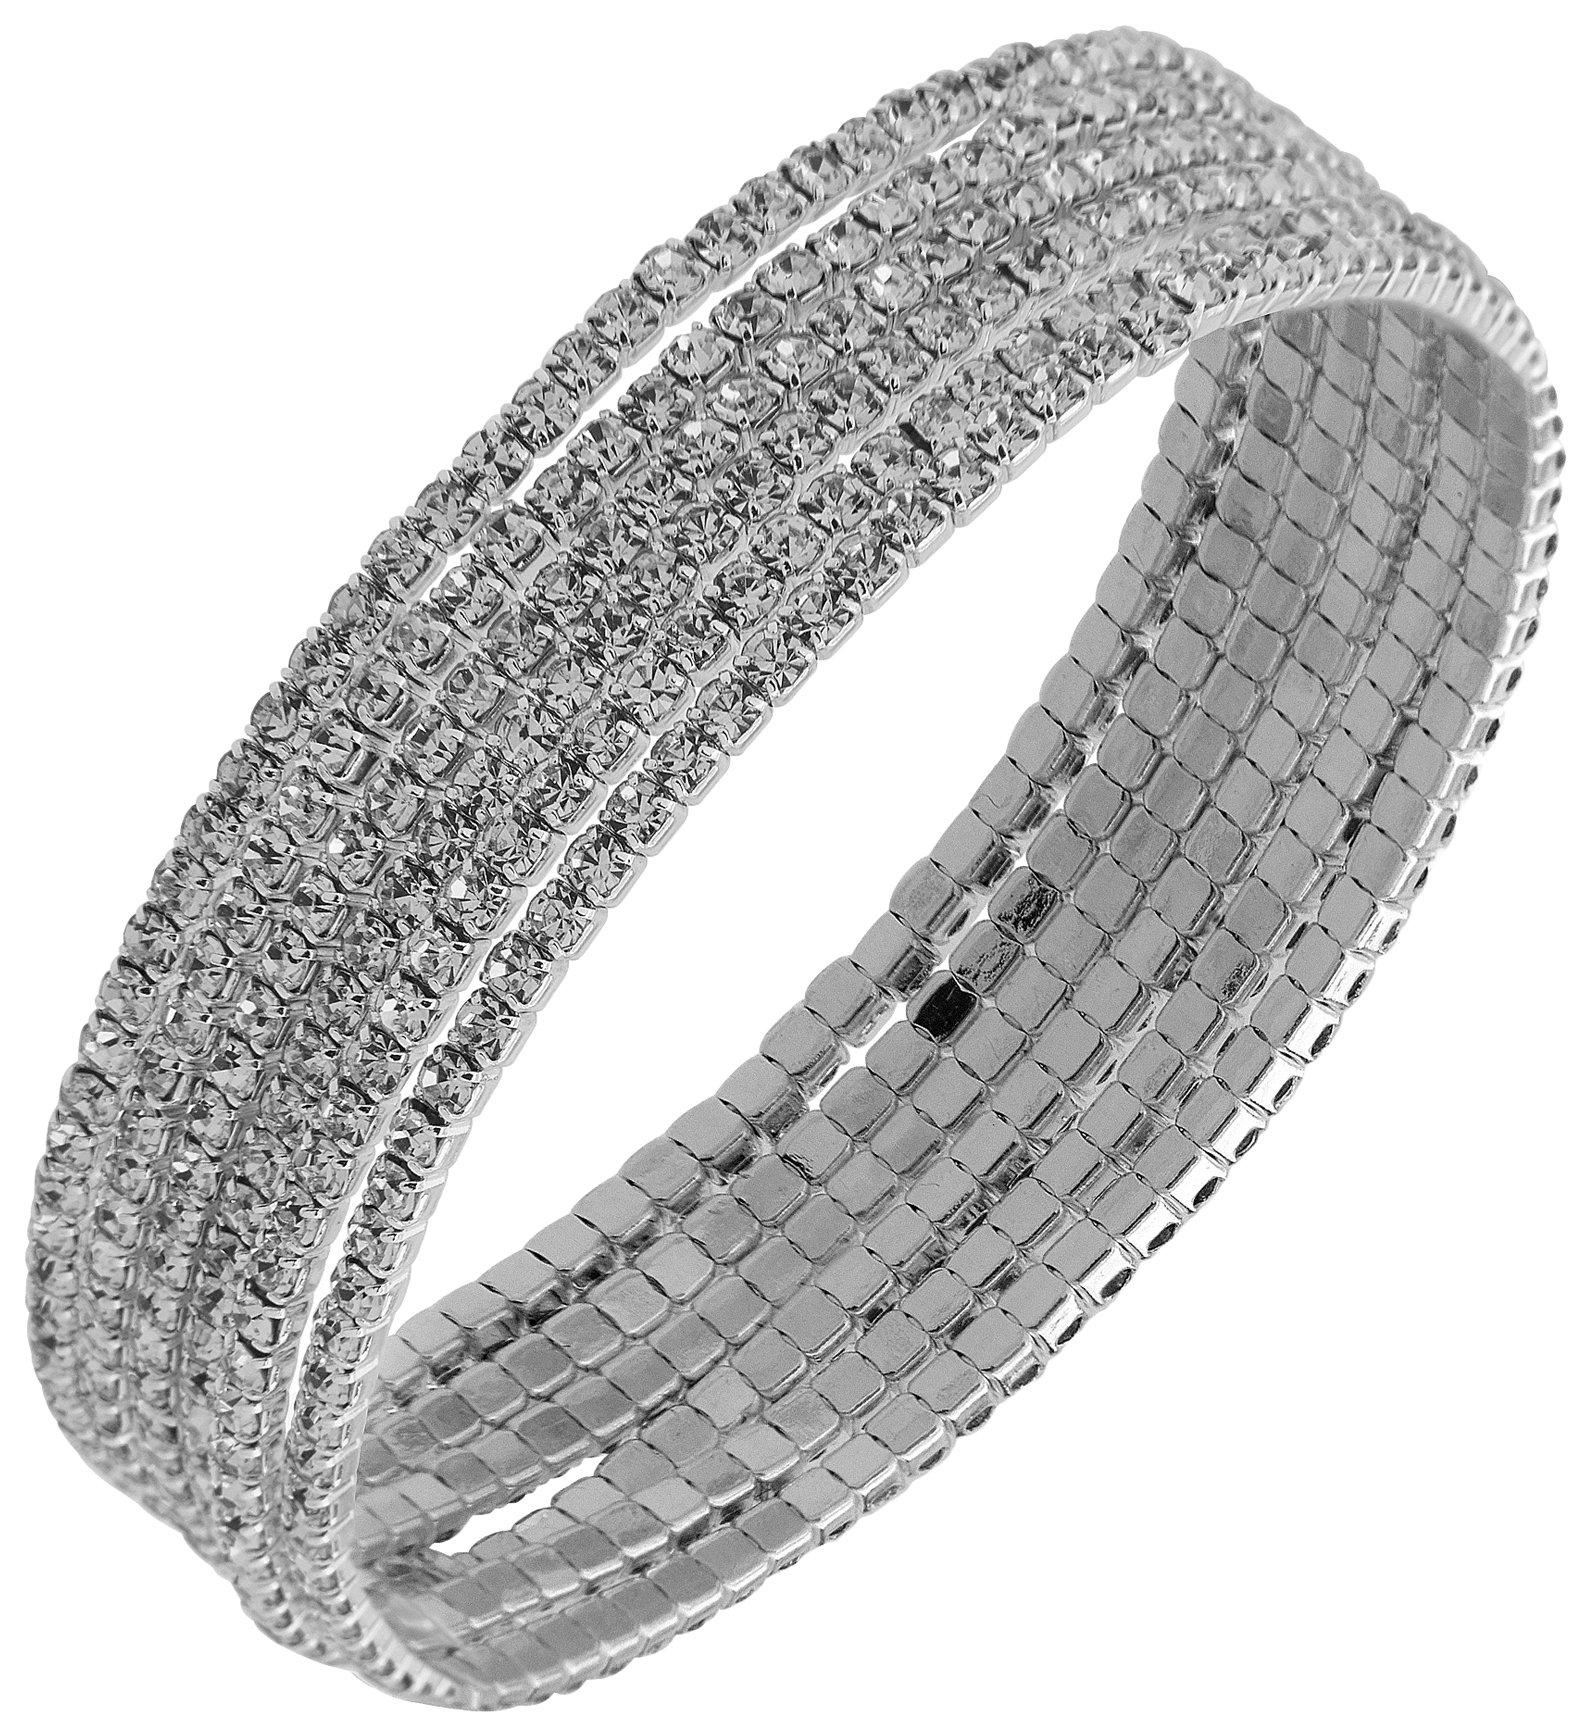 6-Pc. Crystal Rhinestone Bracelet Set